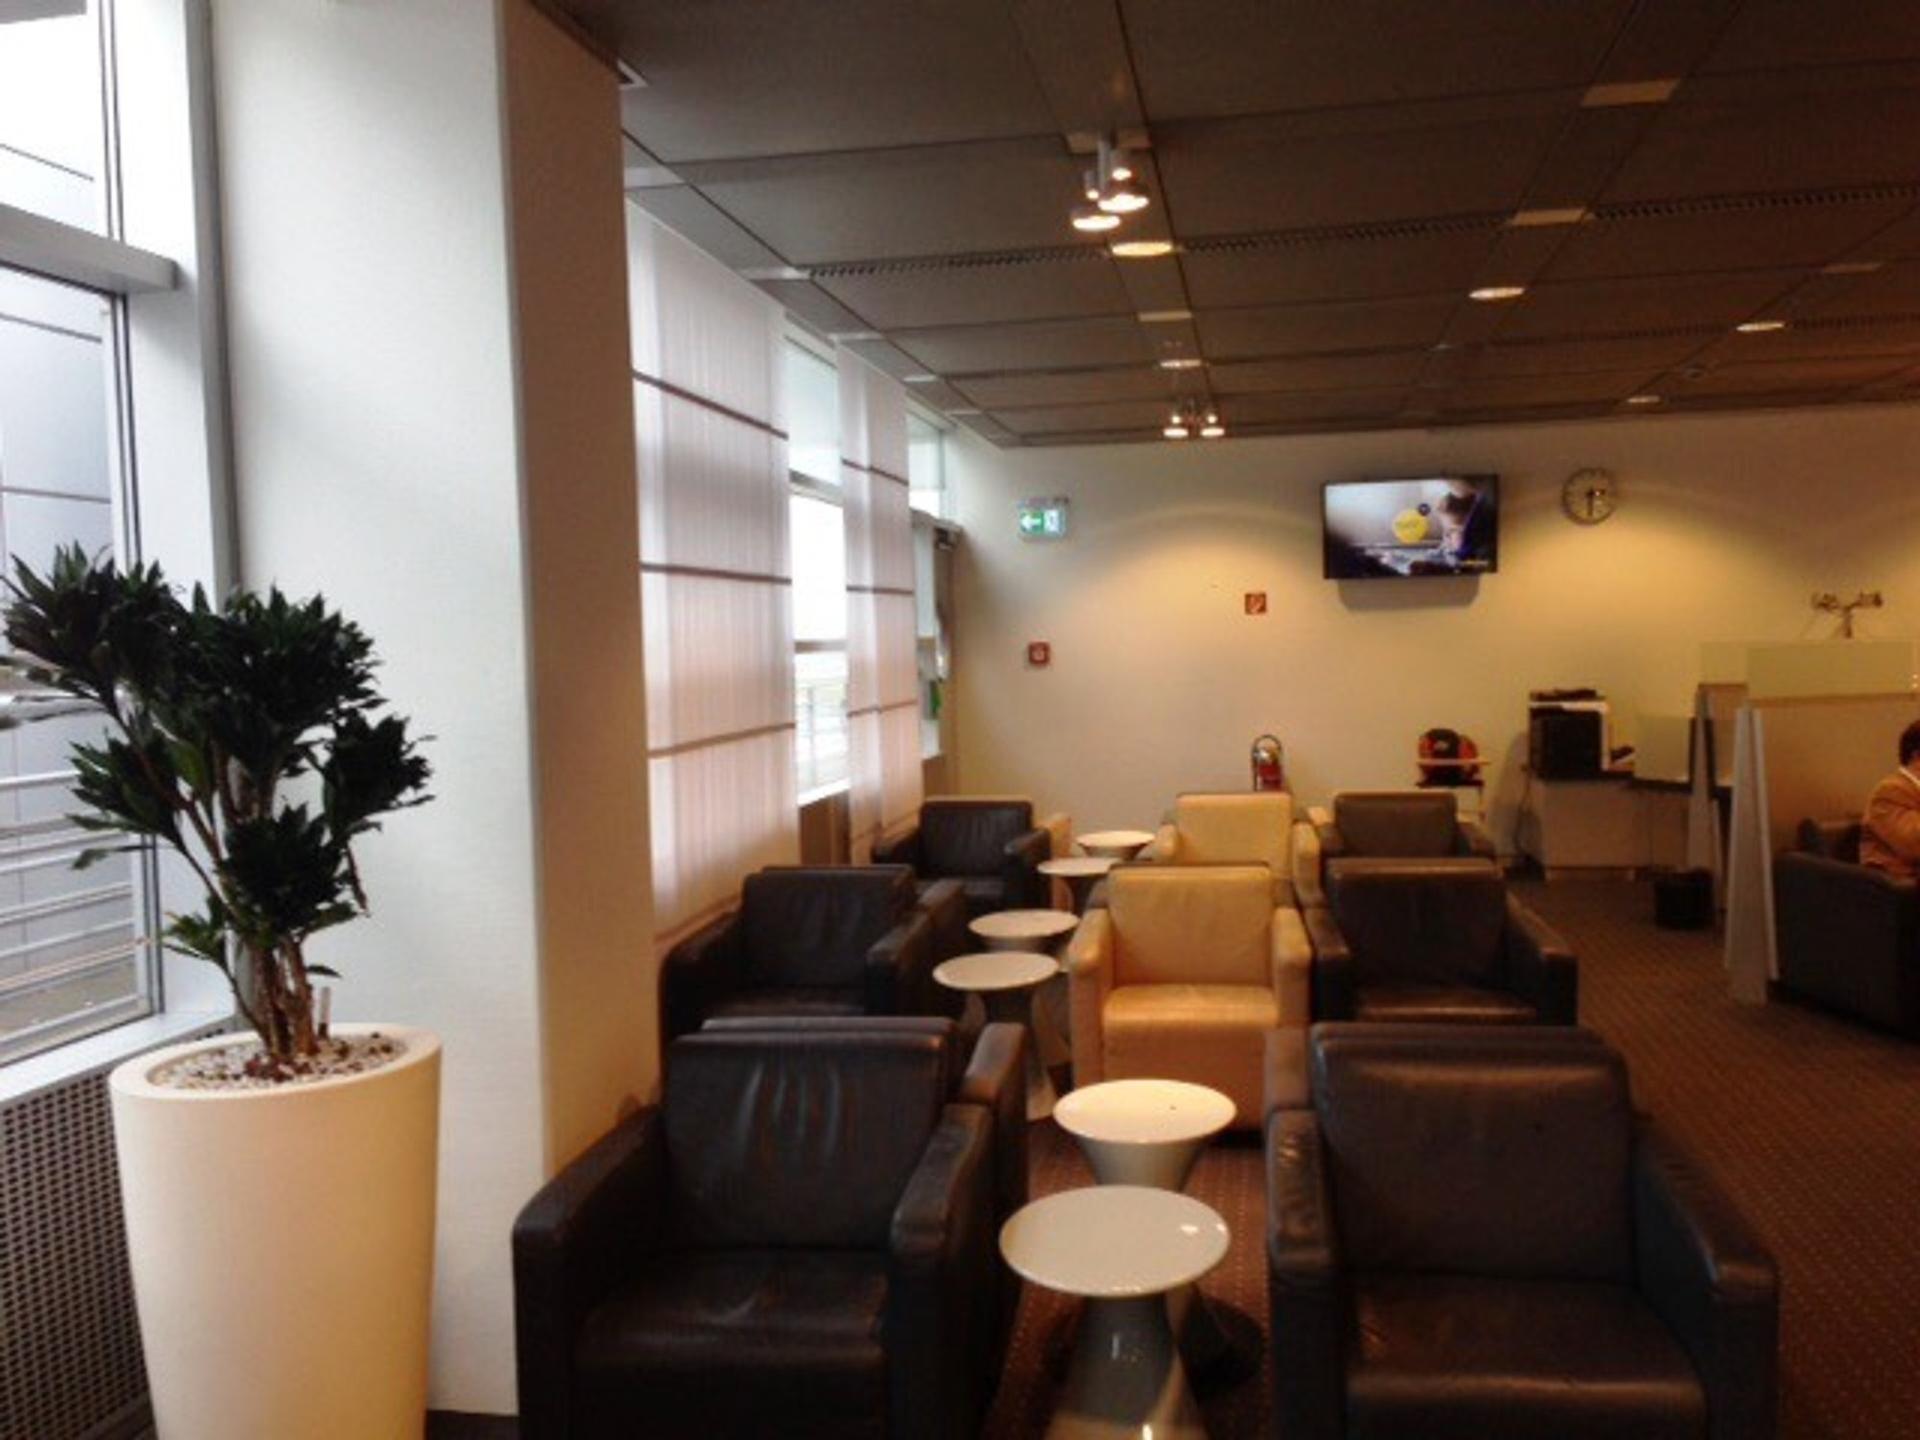 Lufthansa Business Lounge image 2 of 13